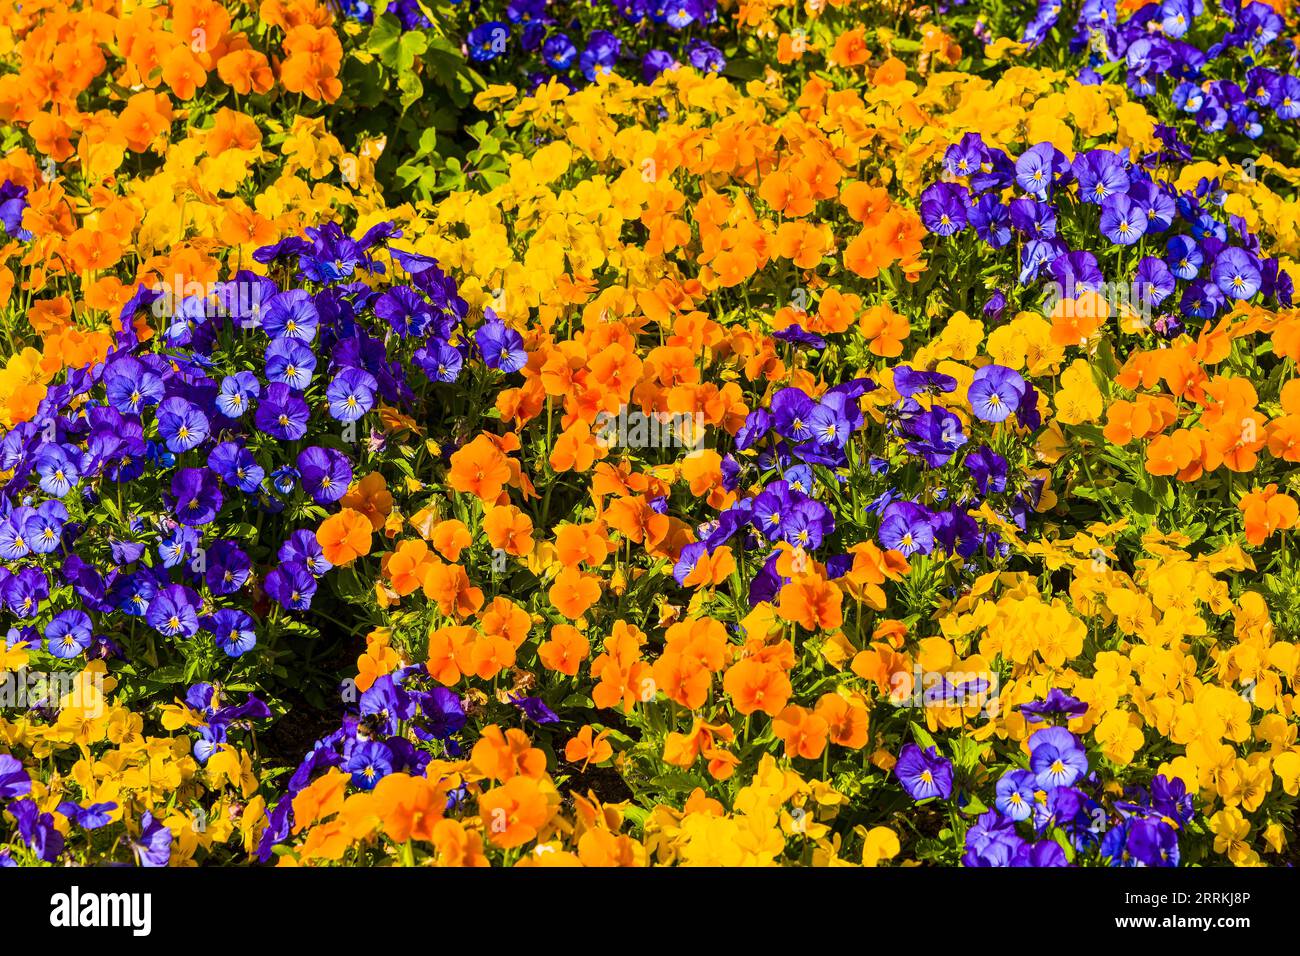 multicolored flower carpet of pansies (viola) Stock Photo